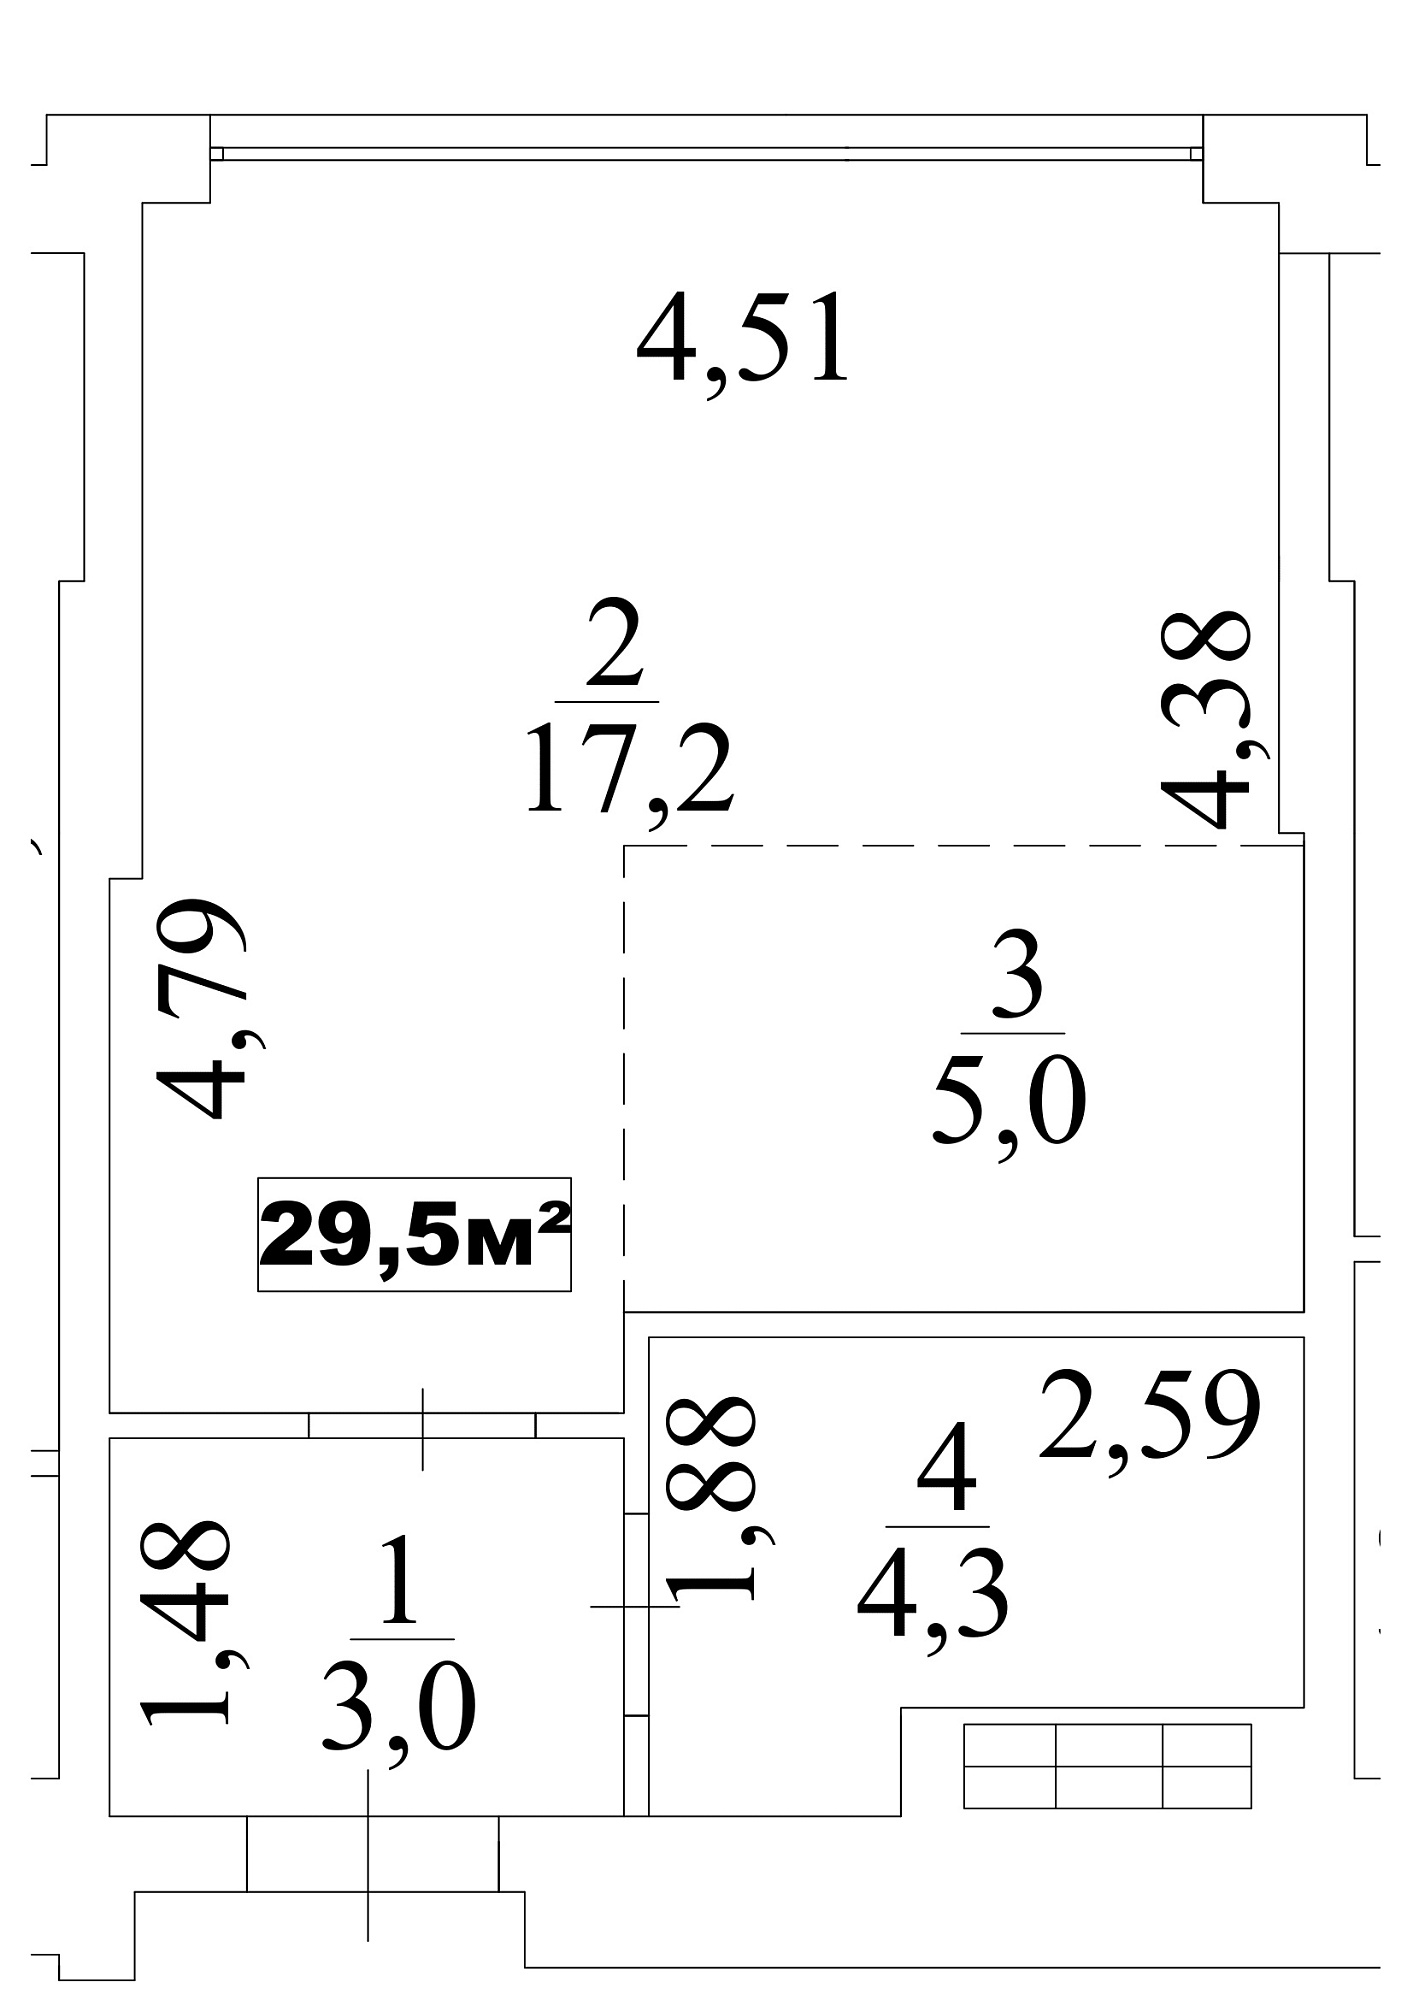 Планировка Smart-квартира площей 29.5м2, AB-10-04/00032.